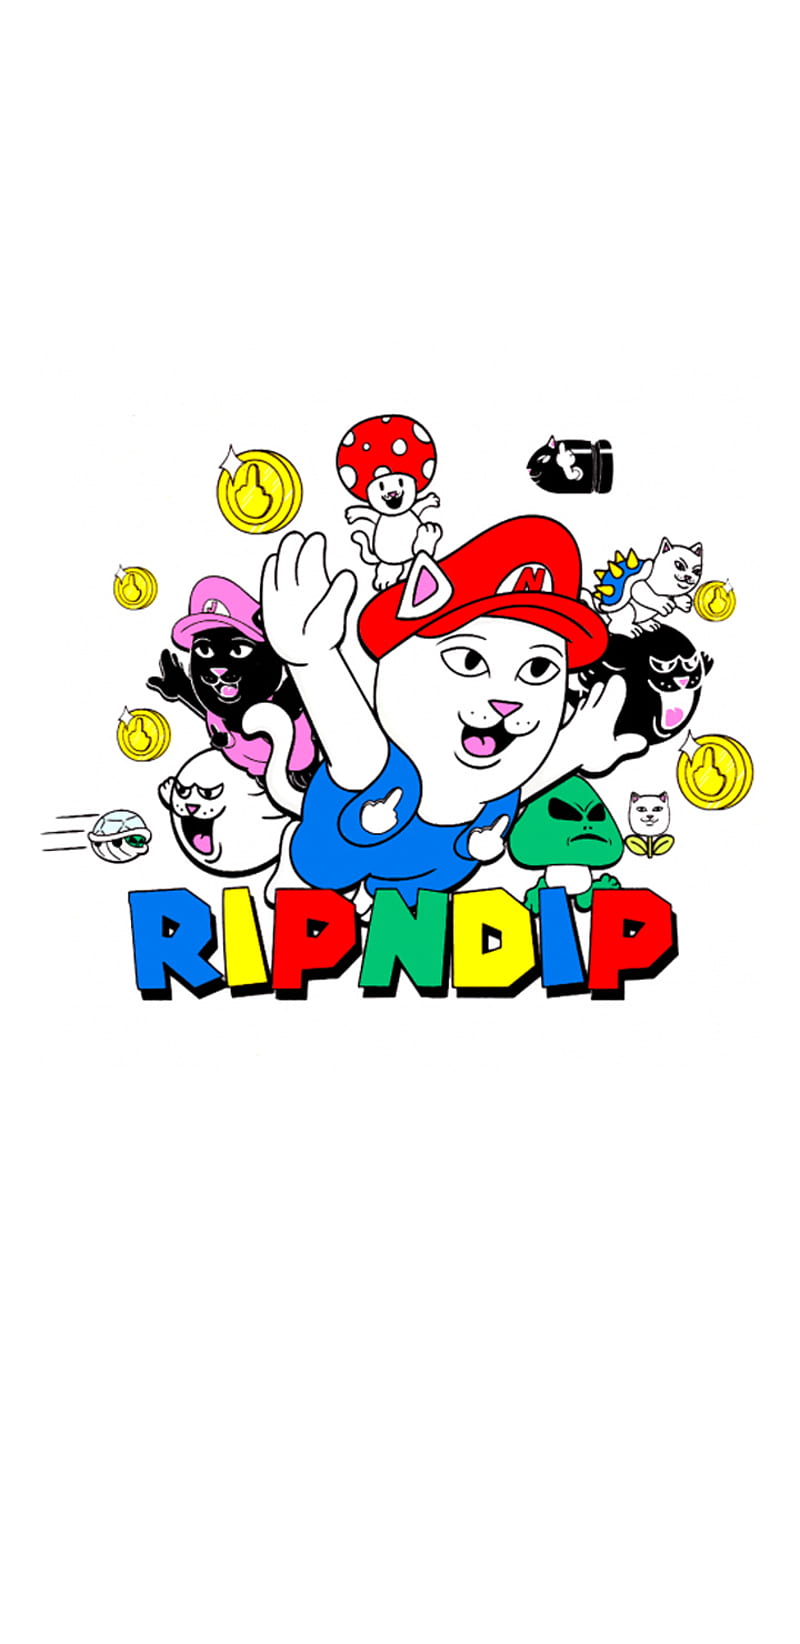 1920x1080px, 1080P free download | RIPNDIP, cartoon, cat, rip n dip ...